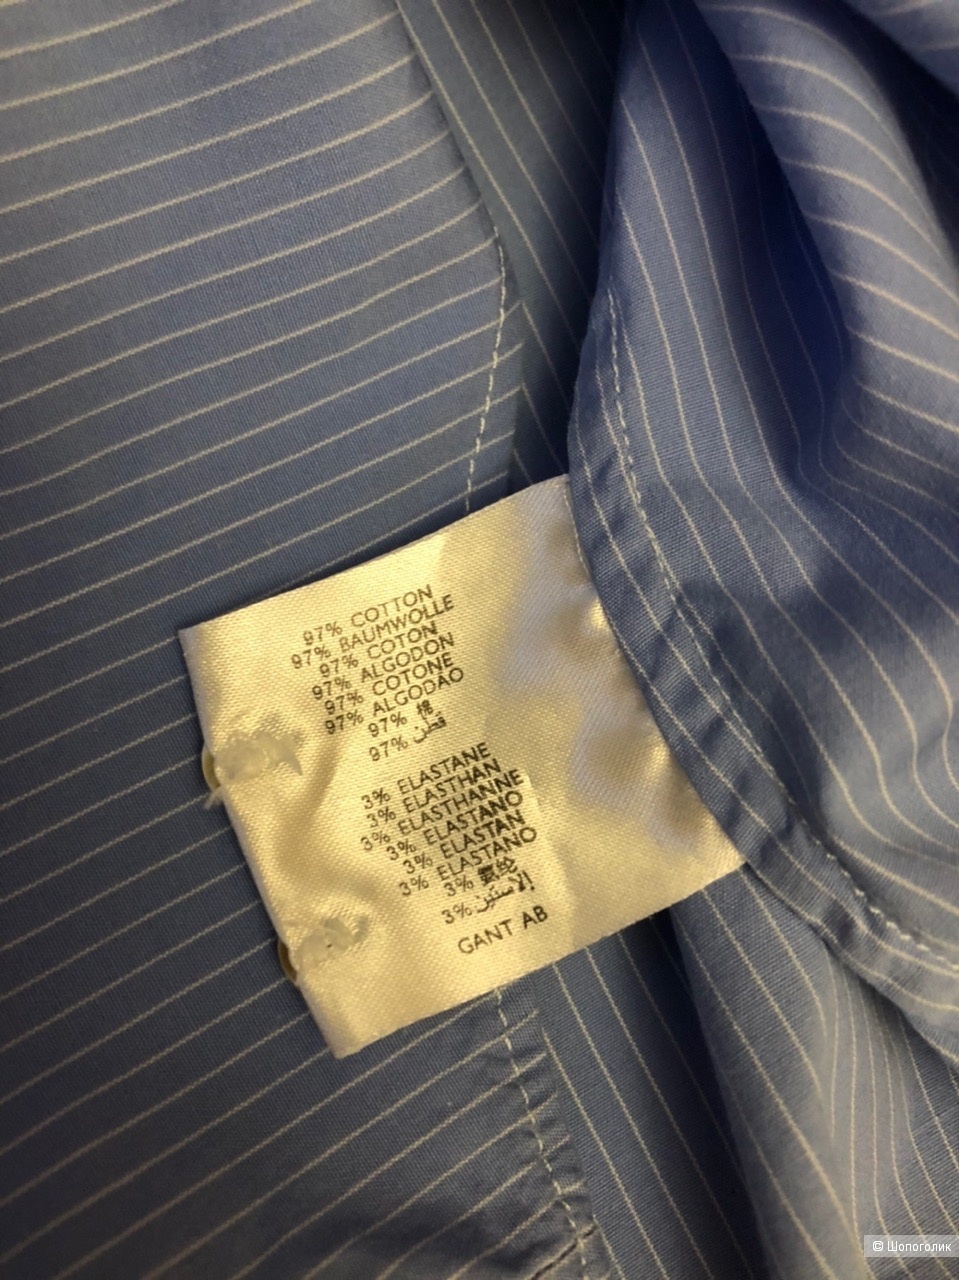 Рубашка GANT Stretch Banker Stripe Broadcloth Shirt Размер 44-46.